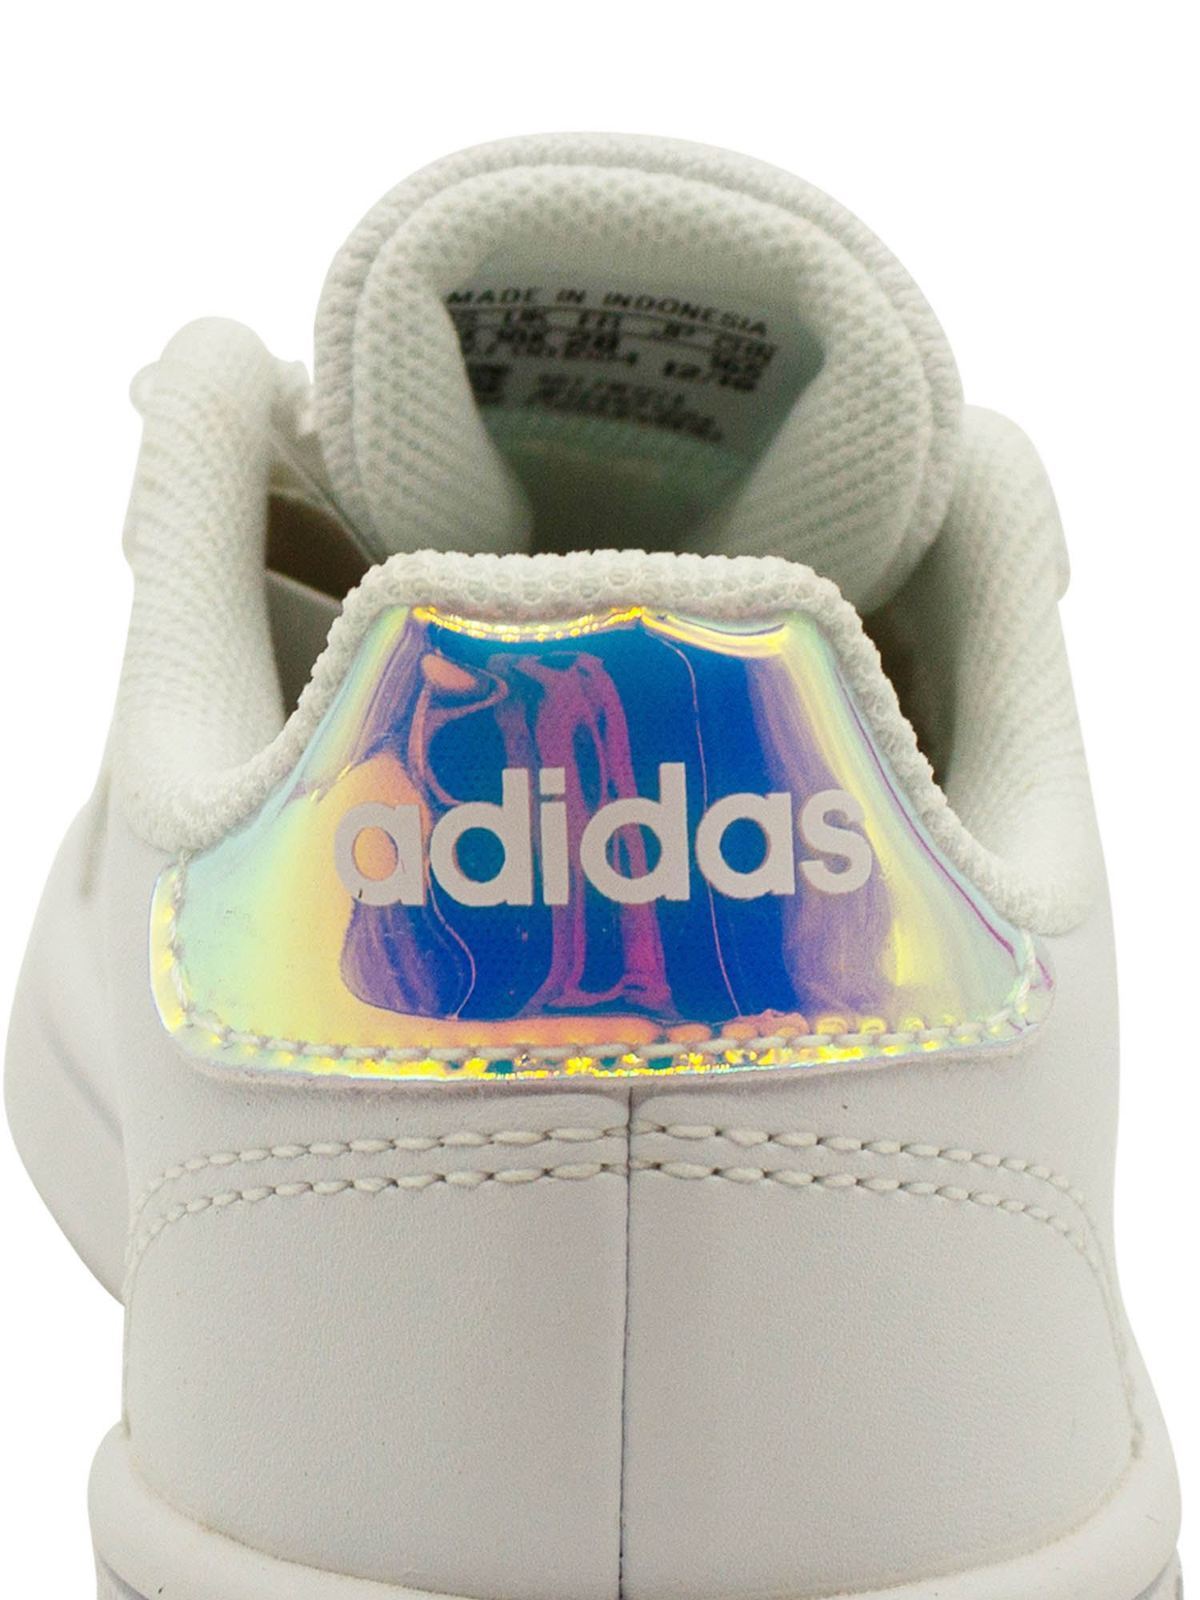 Adidas Originals - Grand Court sneakers white - FW1274